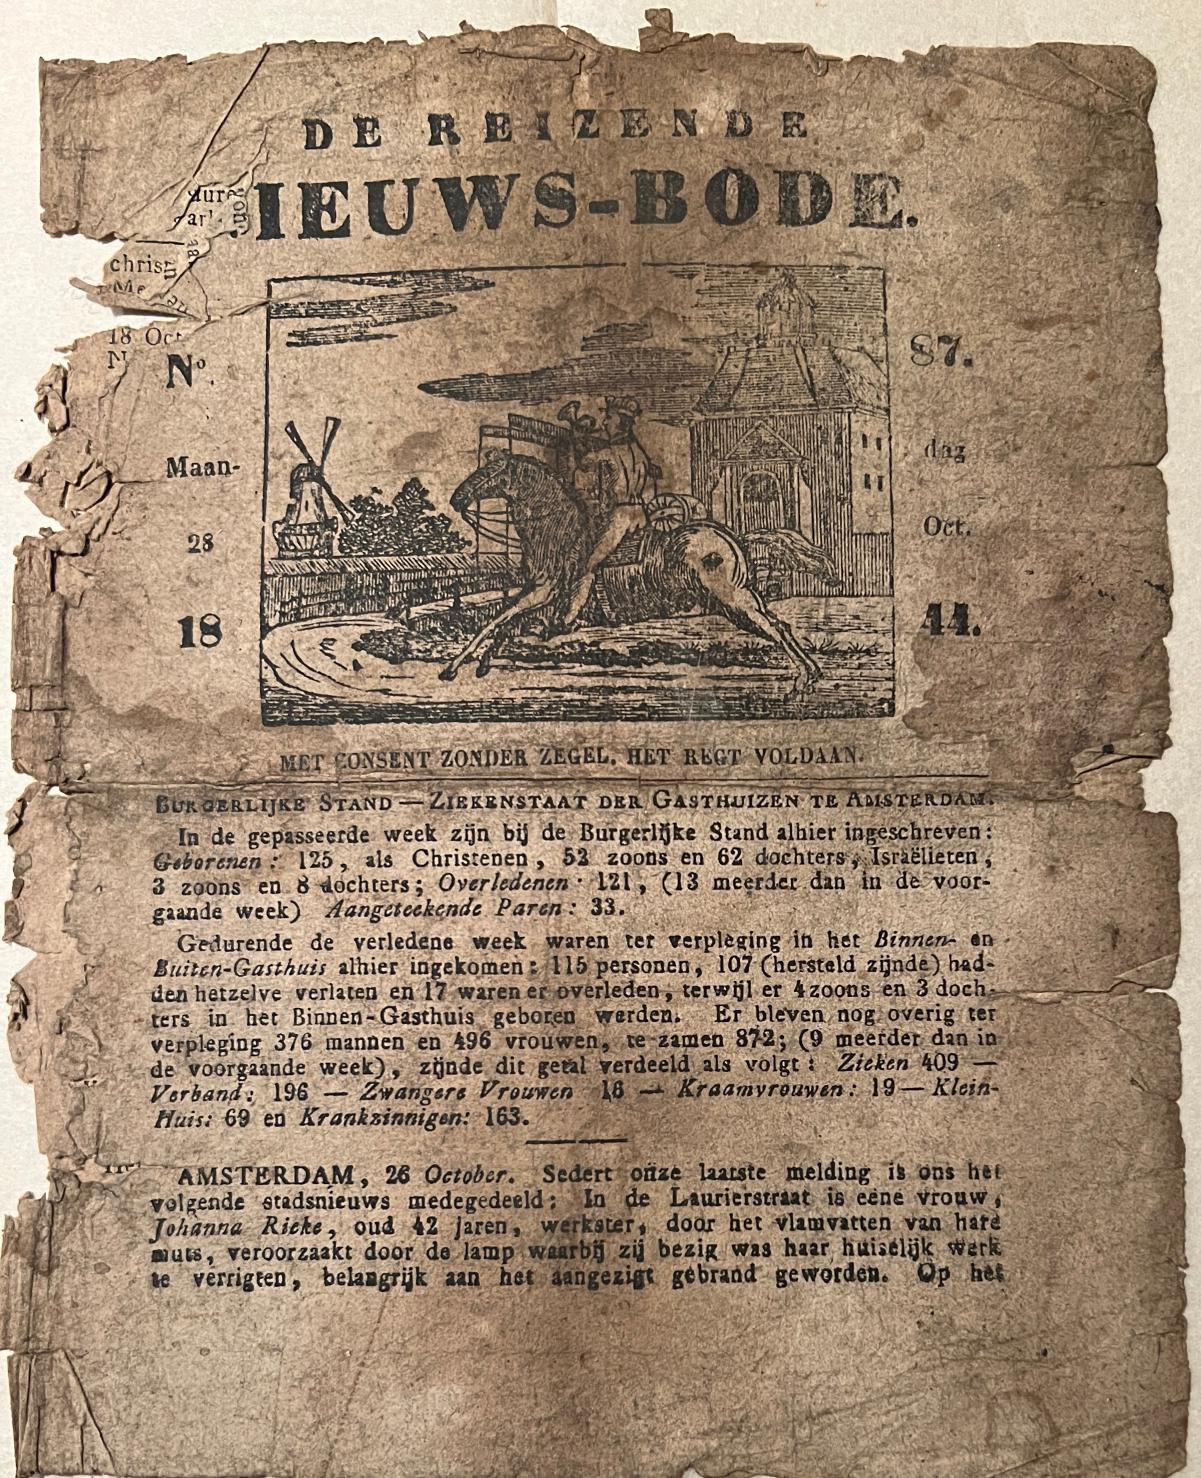 [Pamphlet/Newspaper] - Pamphlet/Newspaper: De reizende Nieuwsbode (nieuws-bode), no 87 maandag 28 oktober 1844, Amsterdam wed Kok, geb. Van Kolm, 4 pp.